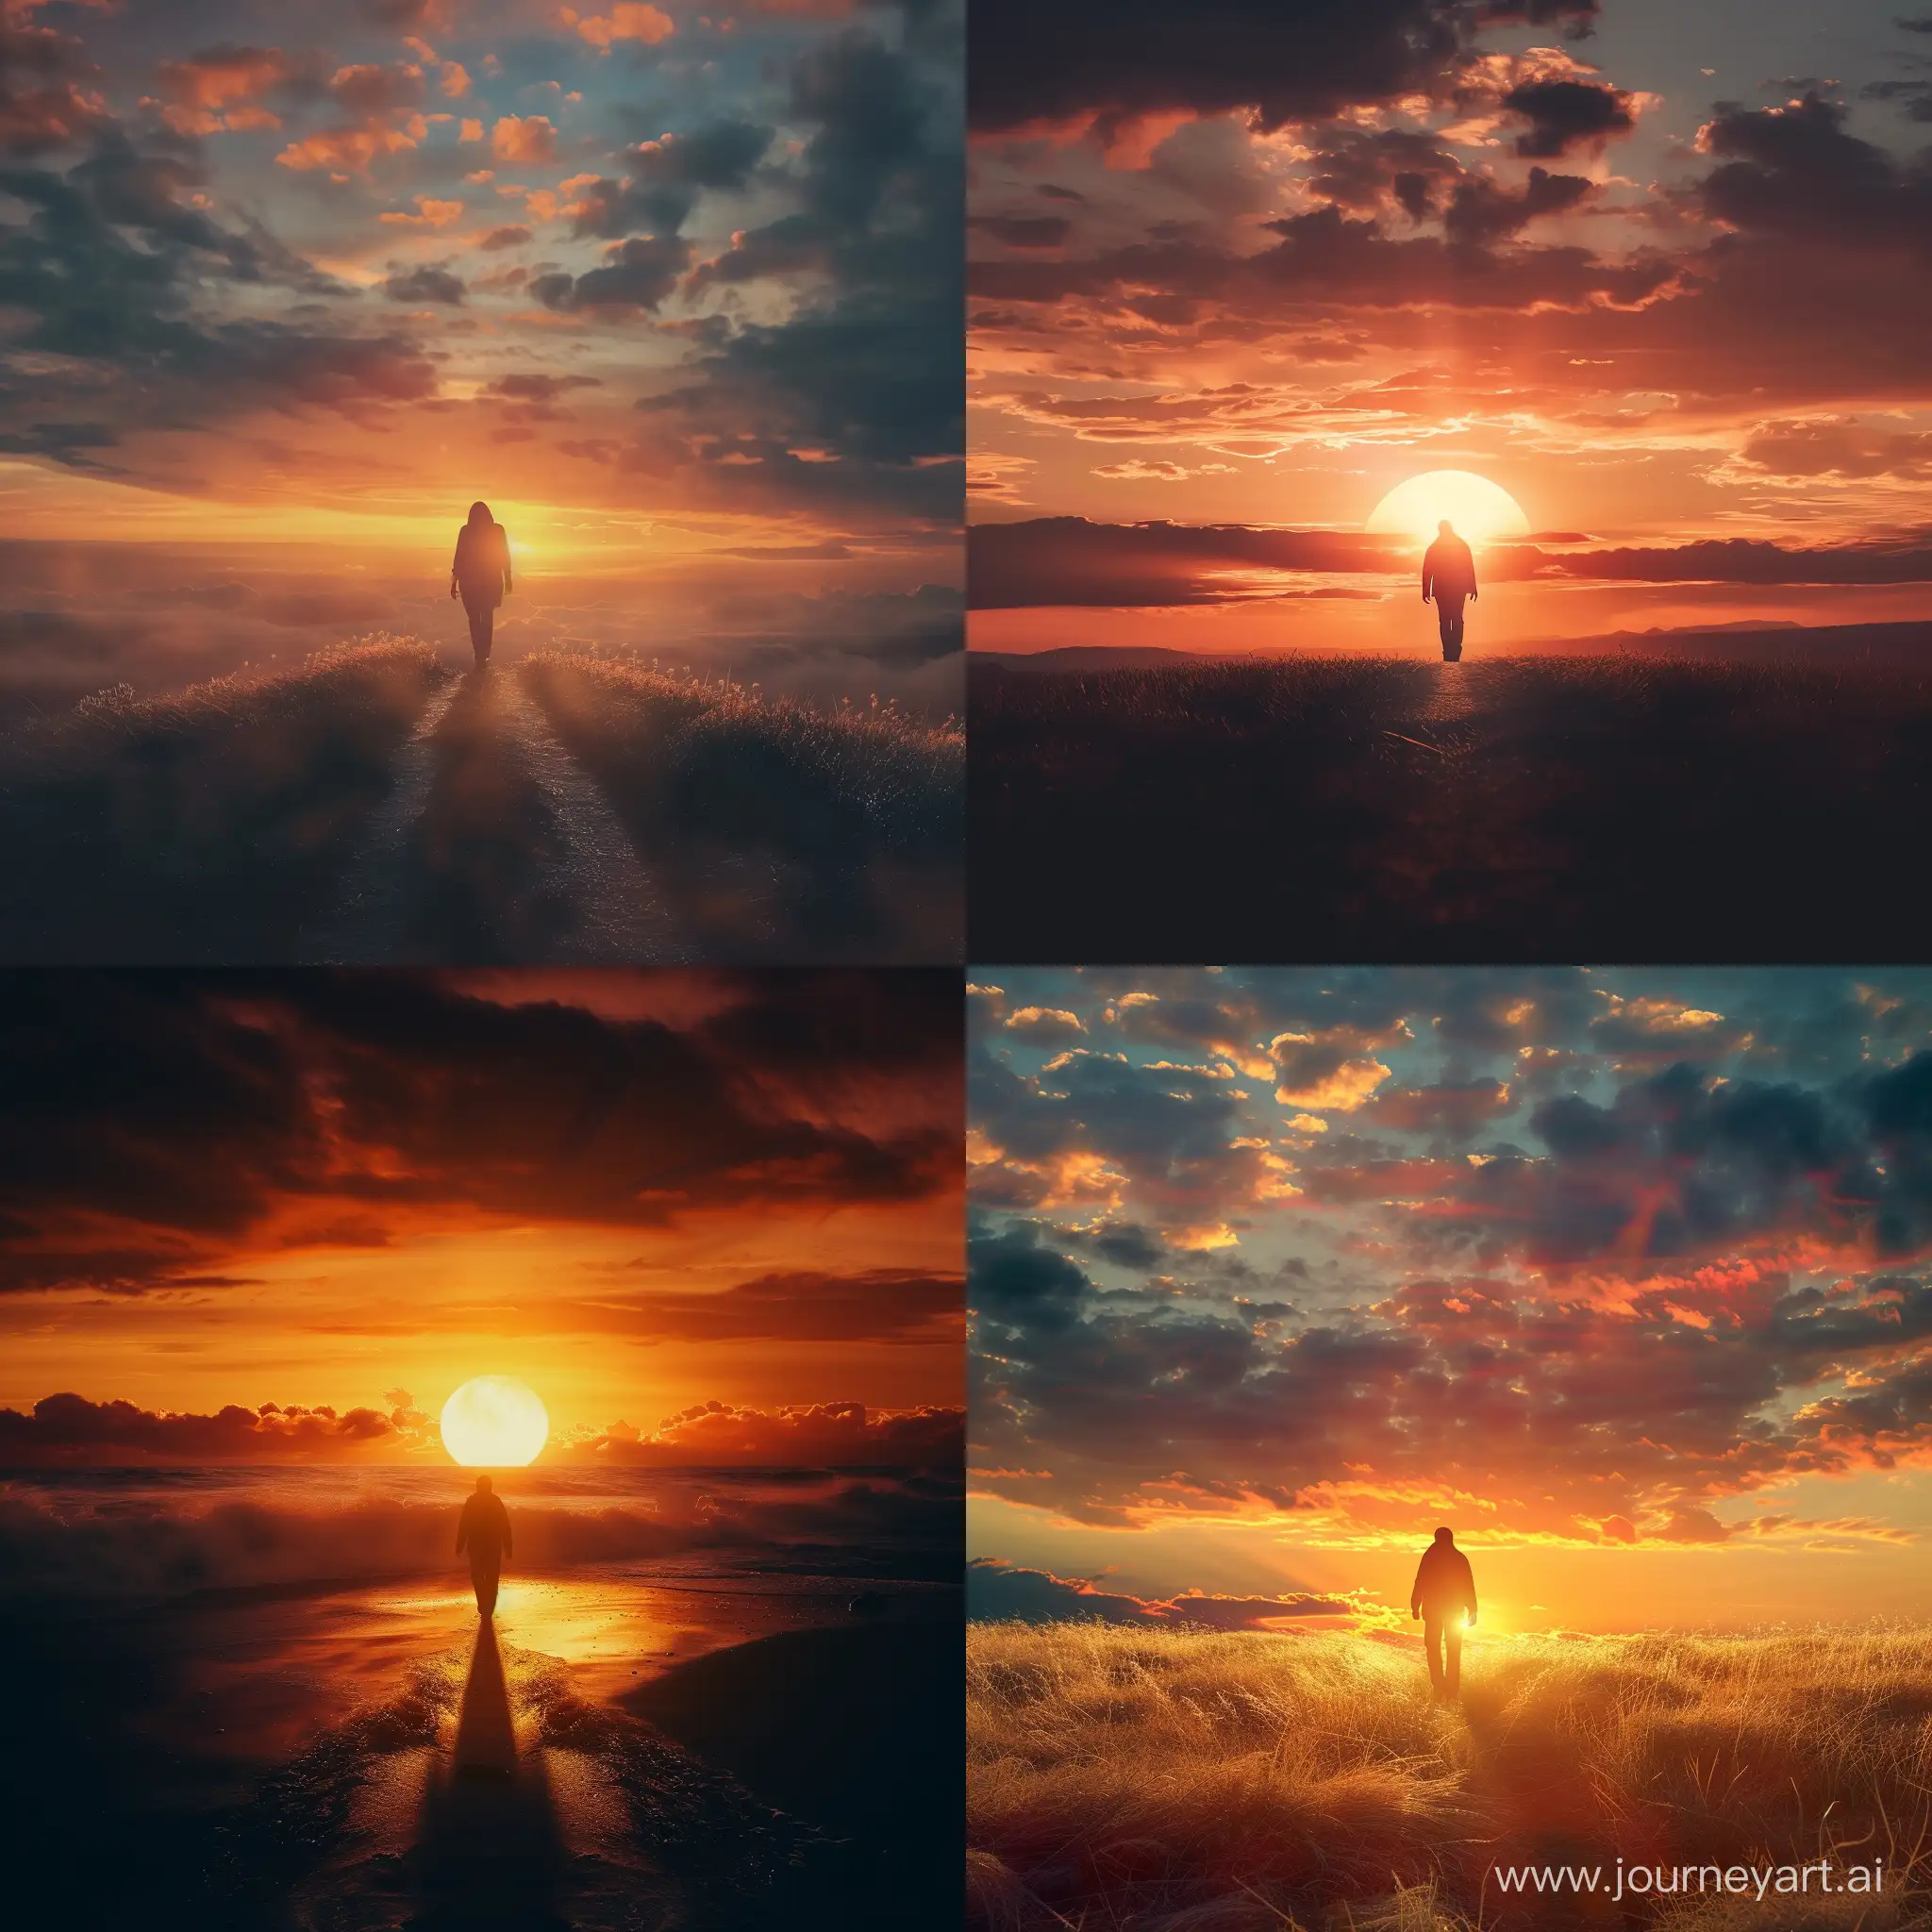 Individual-Walking-into-the-Epic-Sunset-Scene